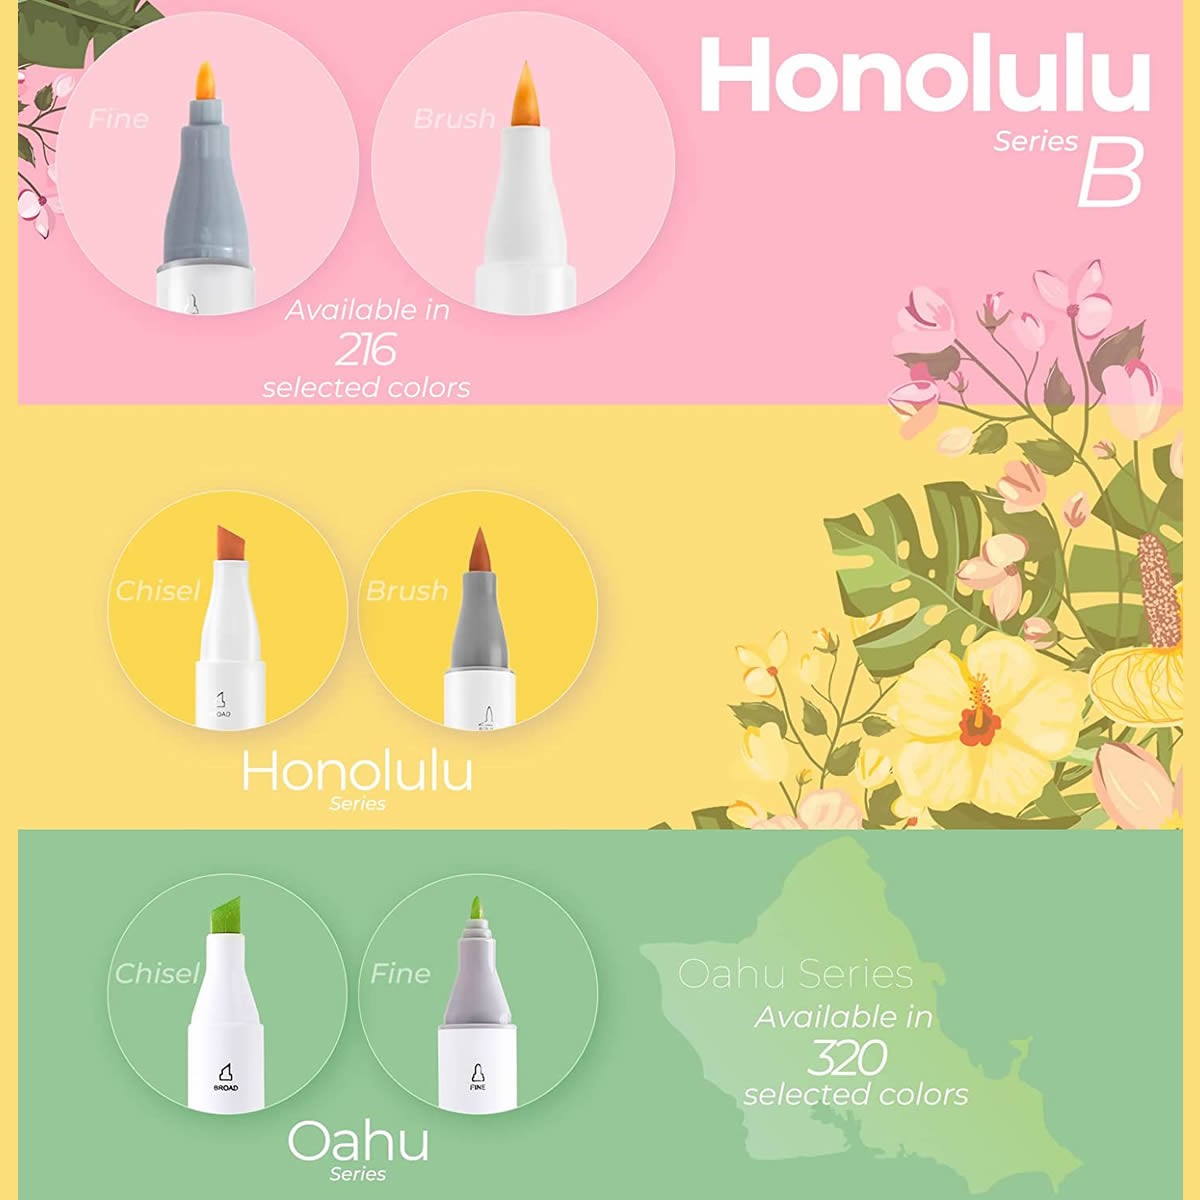 OHUHU Honolulu B Alcohol Art Markers Σετ Μαρκαδόρων 216 Χρωμάτων Brush & Fine